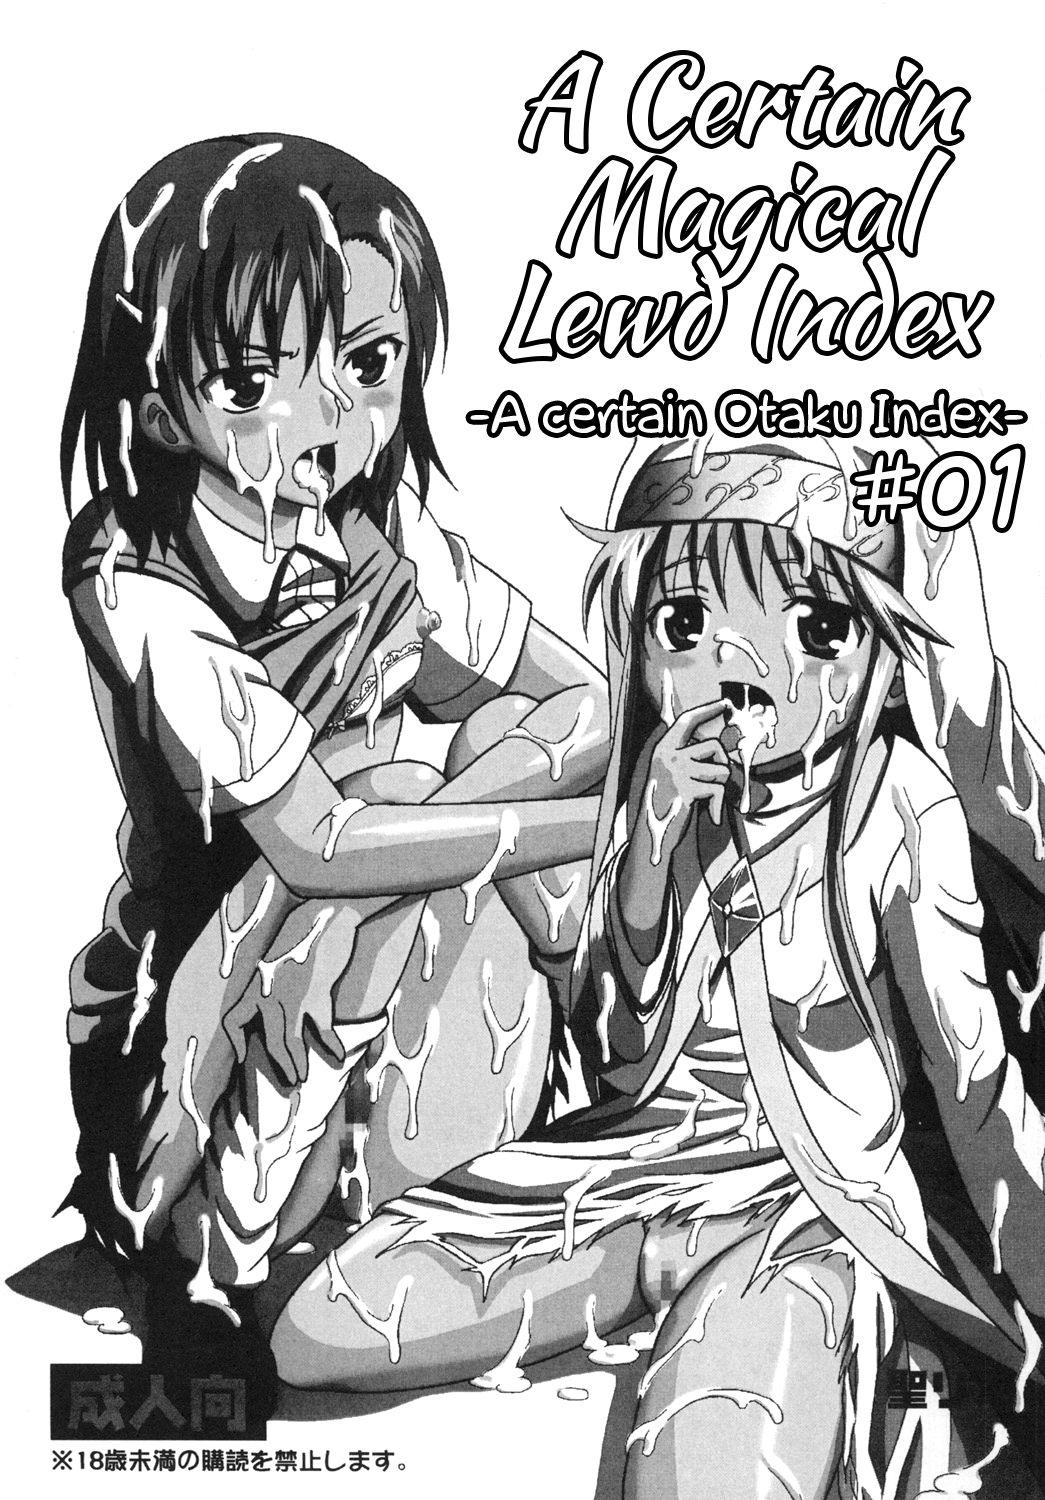 Toaru Otaku no Index #1 | A Certain Otaku Index #1 1